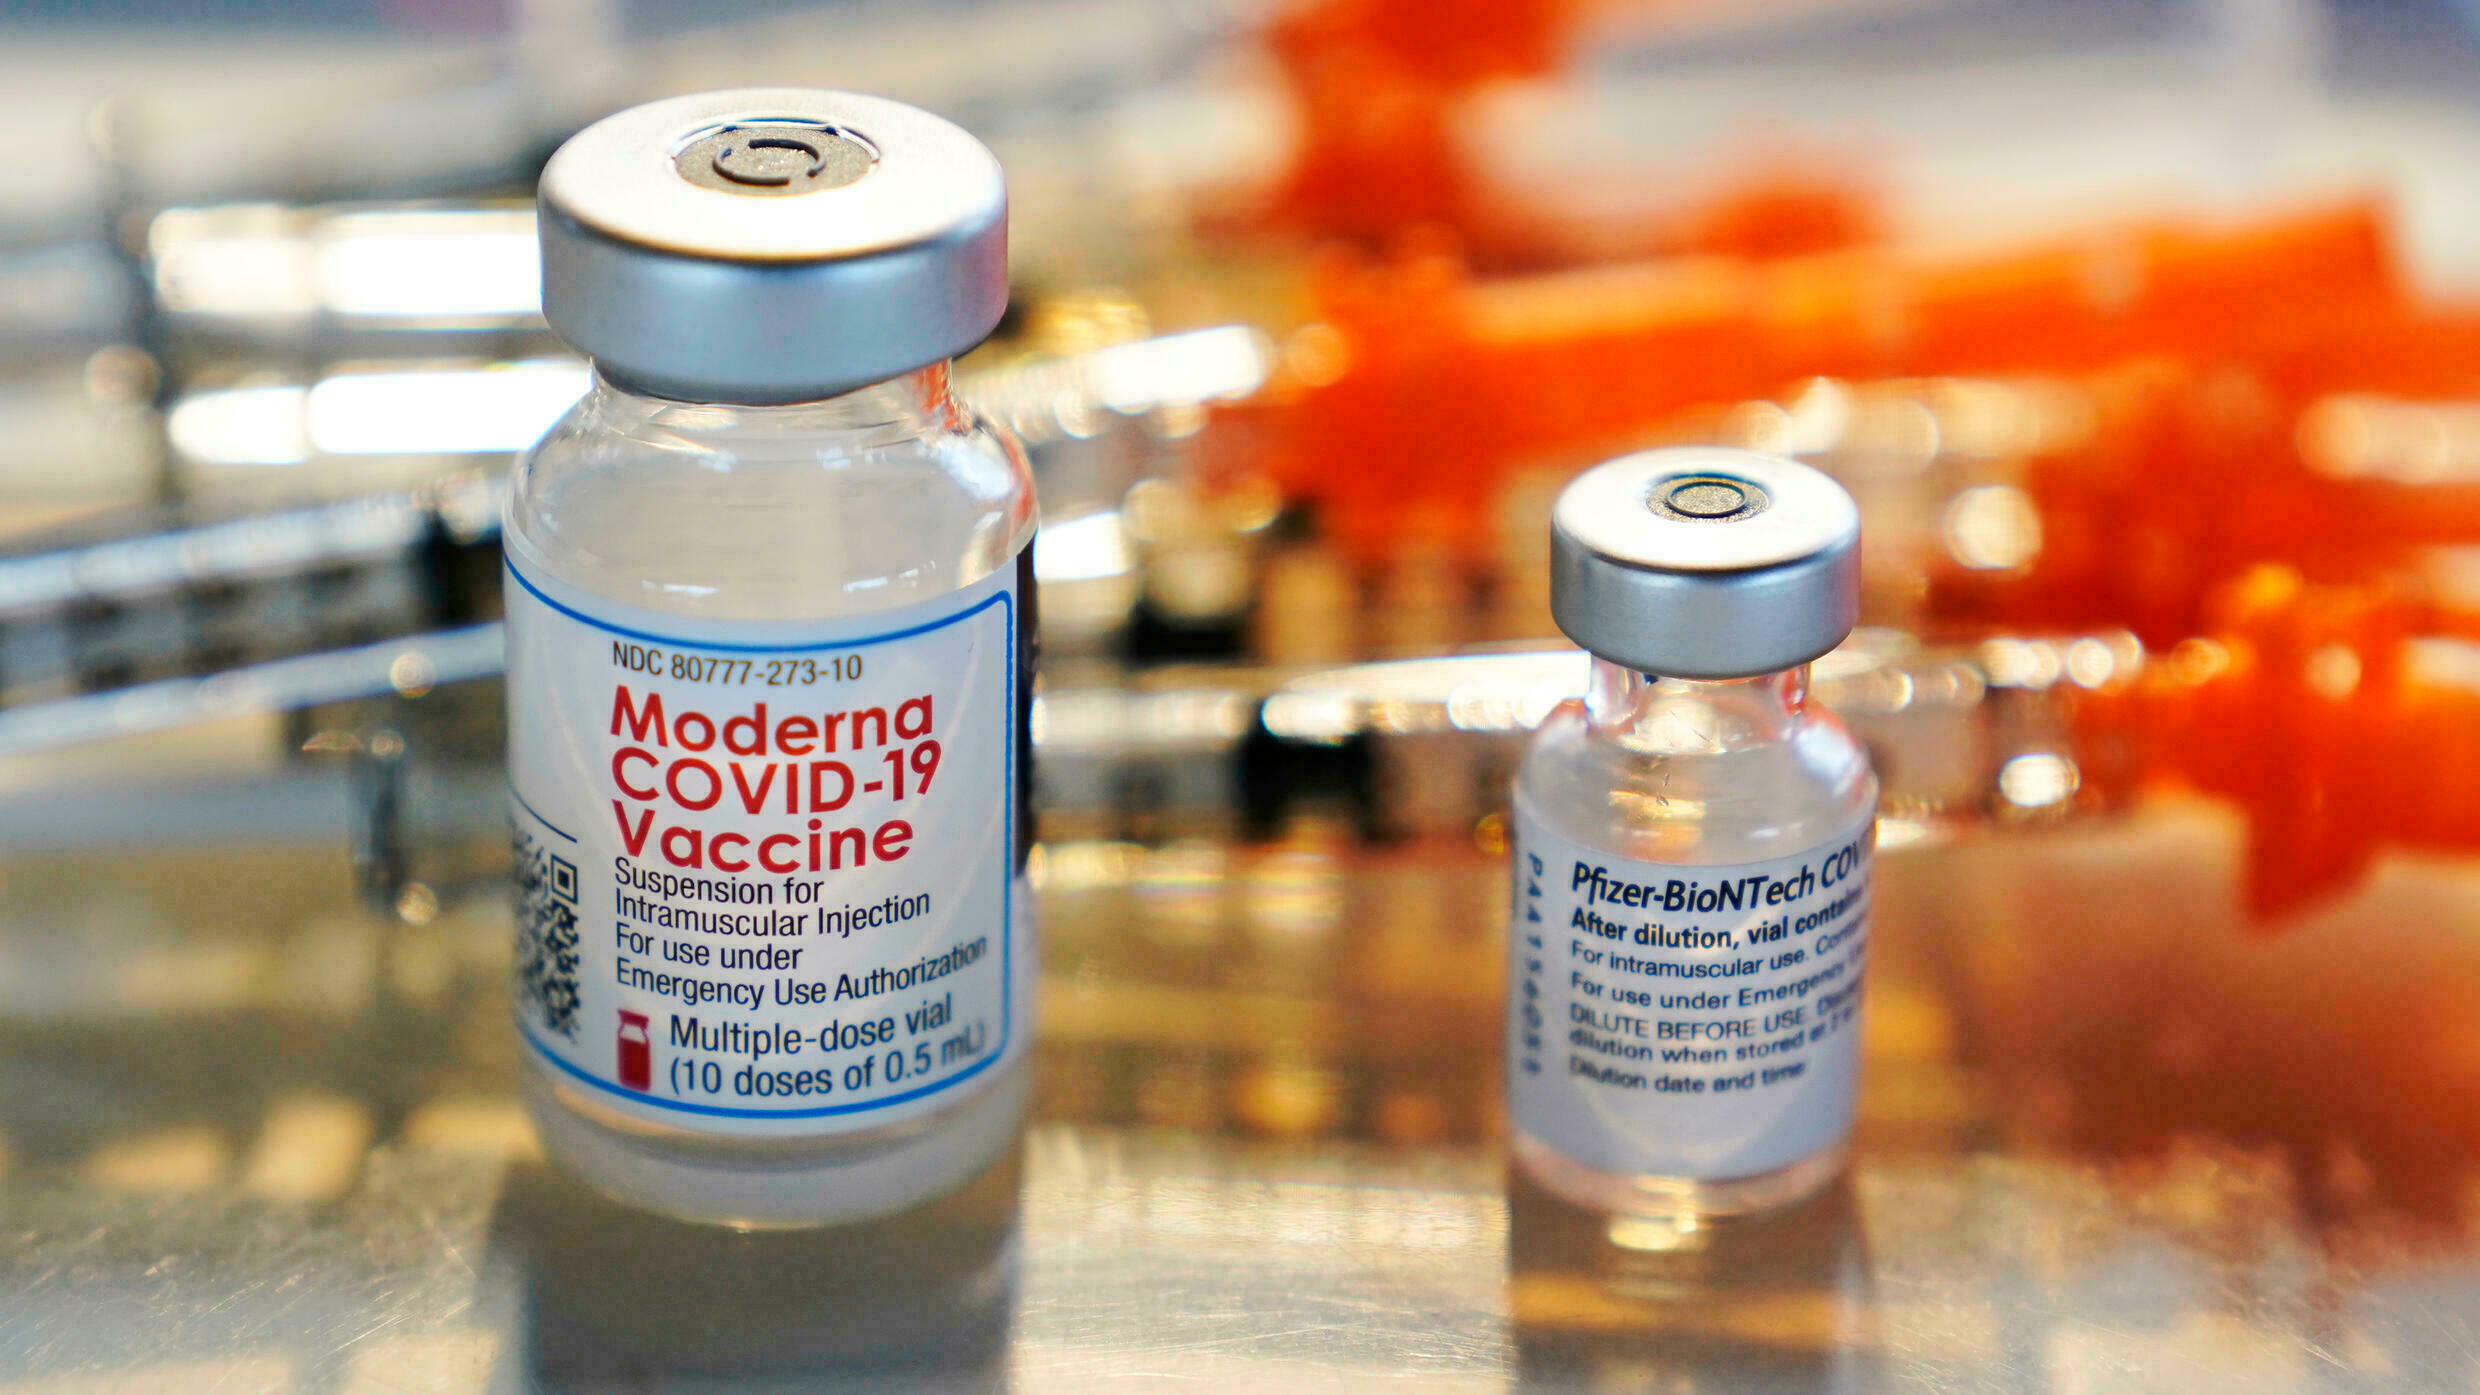 pfizer-va-moderna-doi-gia-vaccine-gap-5-lan-so-voi-c